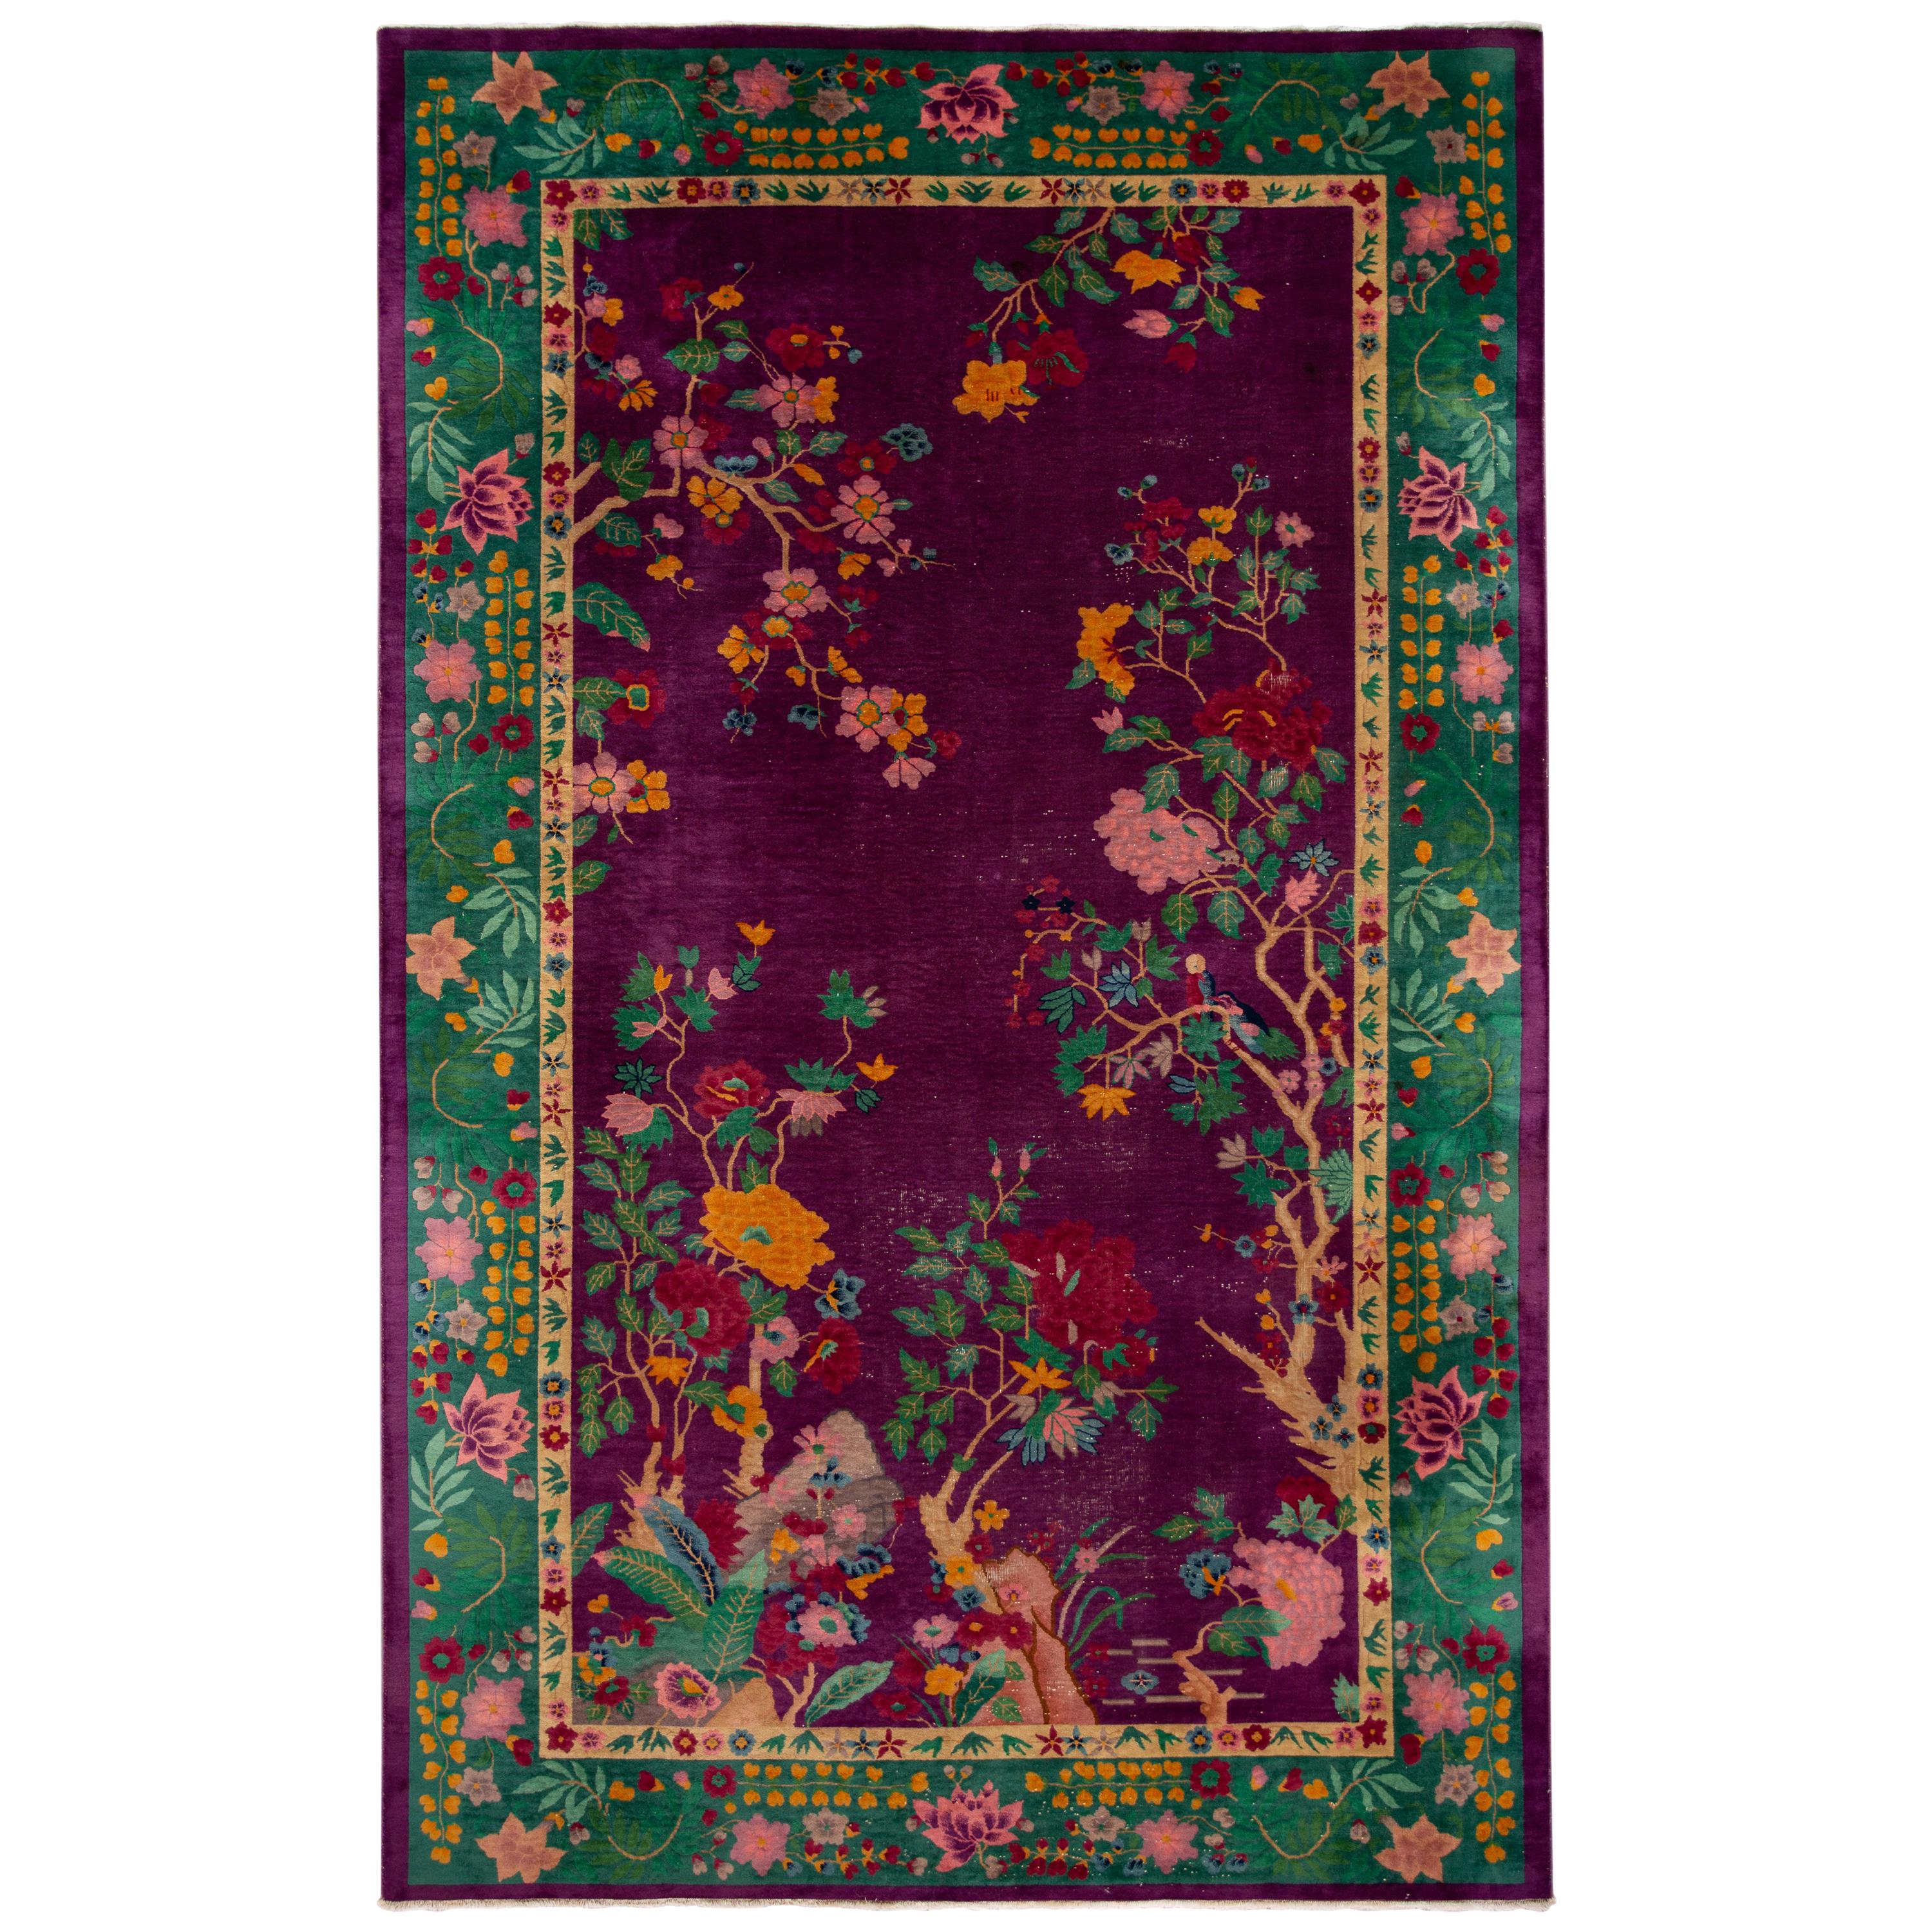 Antiker lila Art-Déco-Chinesischer Teppich, 2,25 m x 3 m, antik 